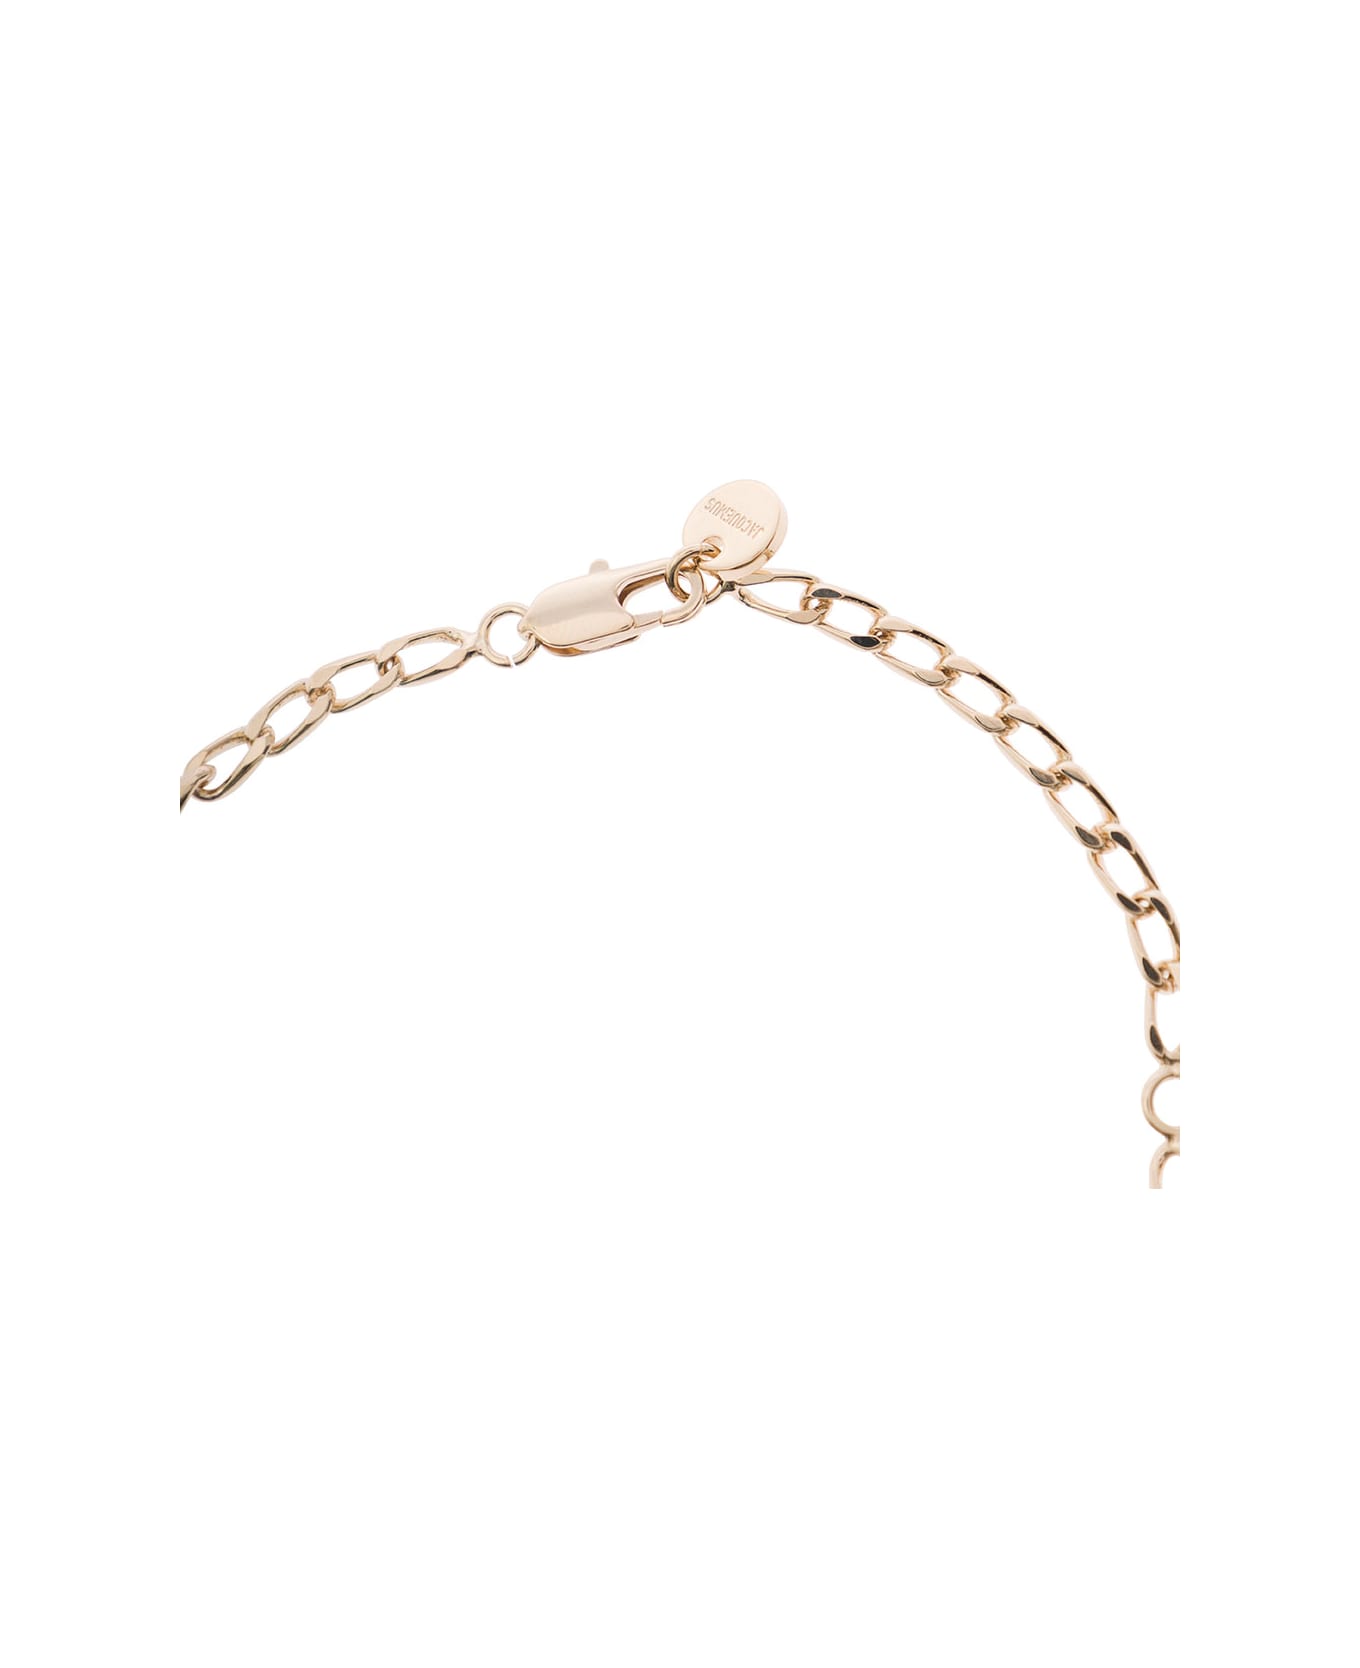 Jacquemus Le Collier Chiquito Necklace - Light gold